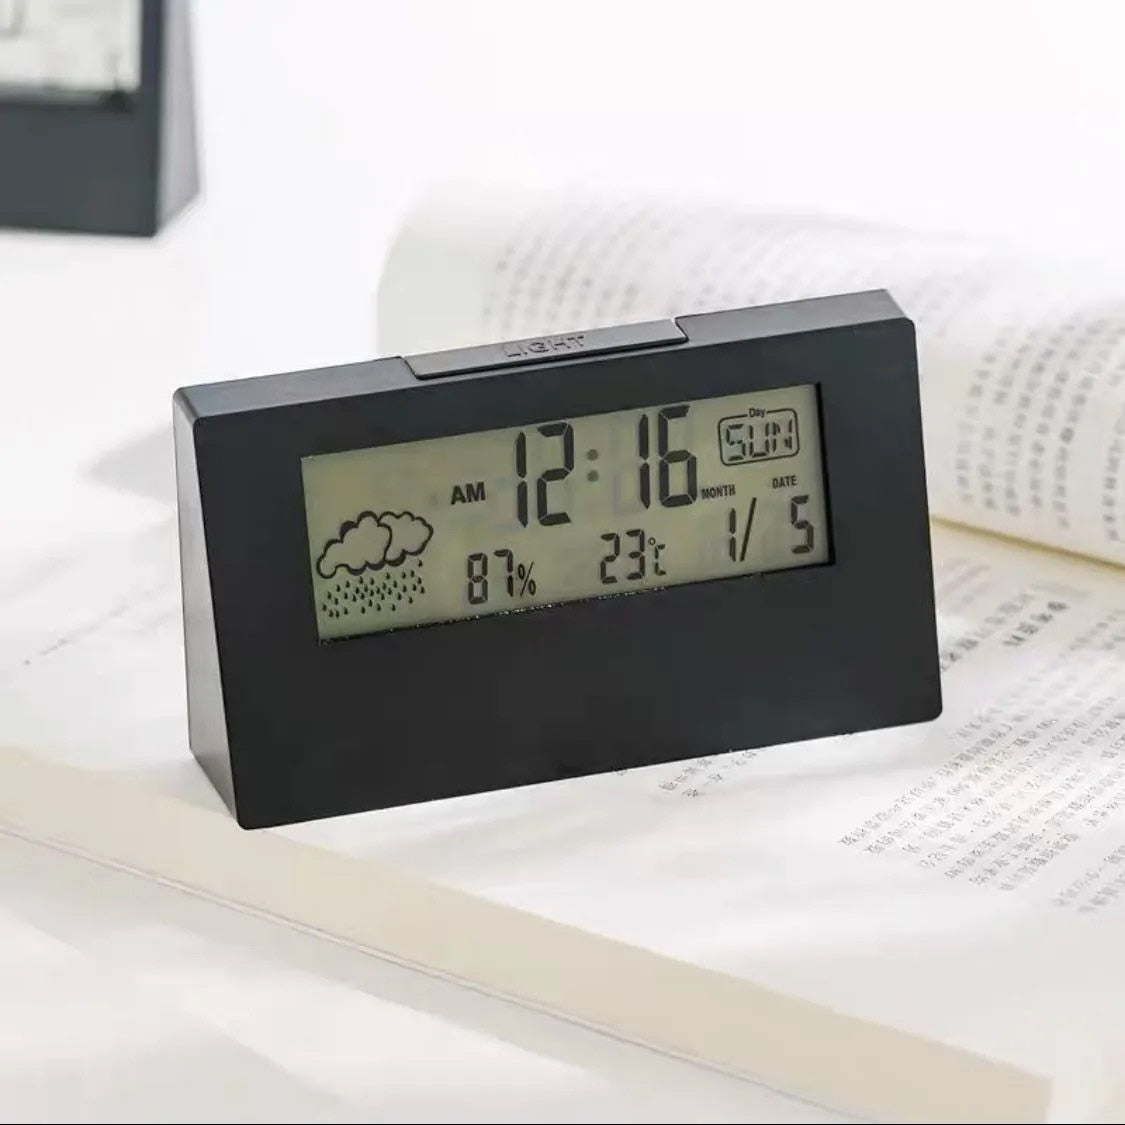 LCD Electric Desk Alarm clock